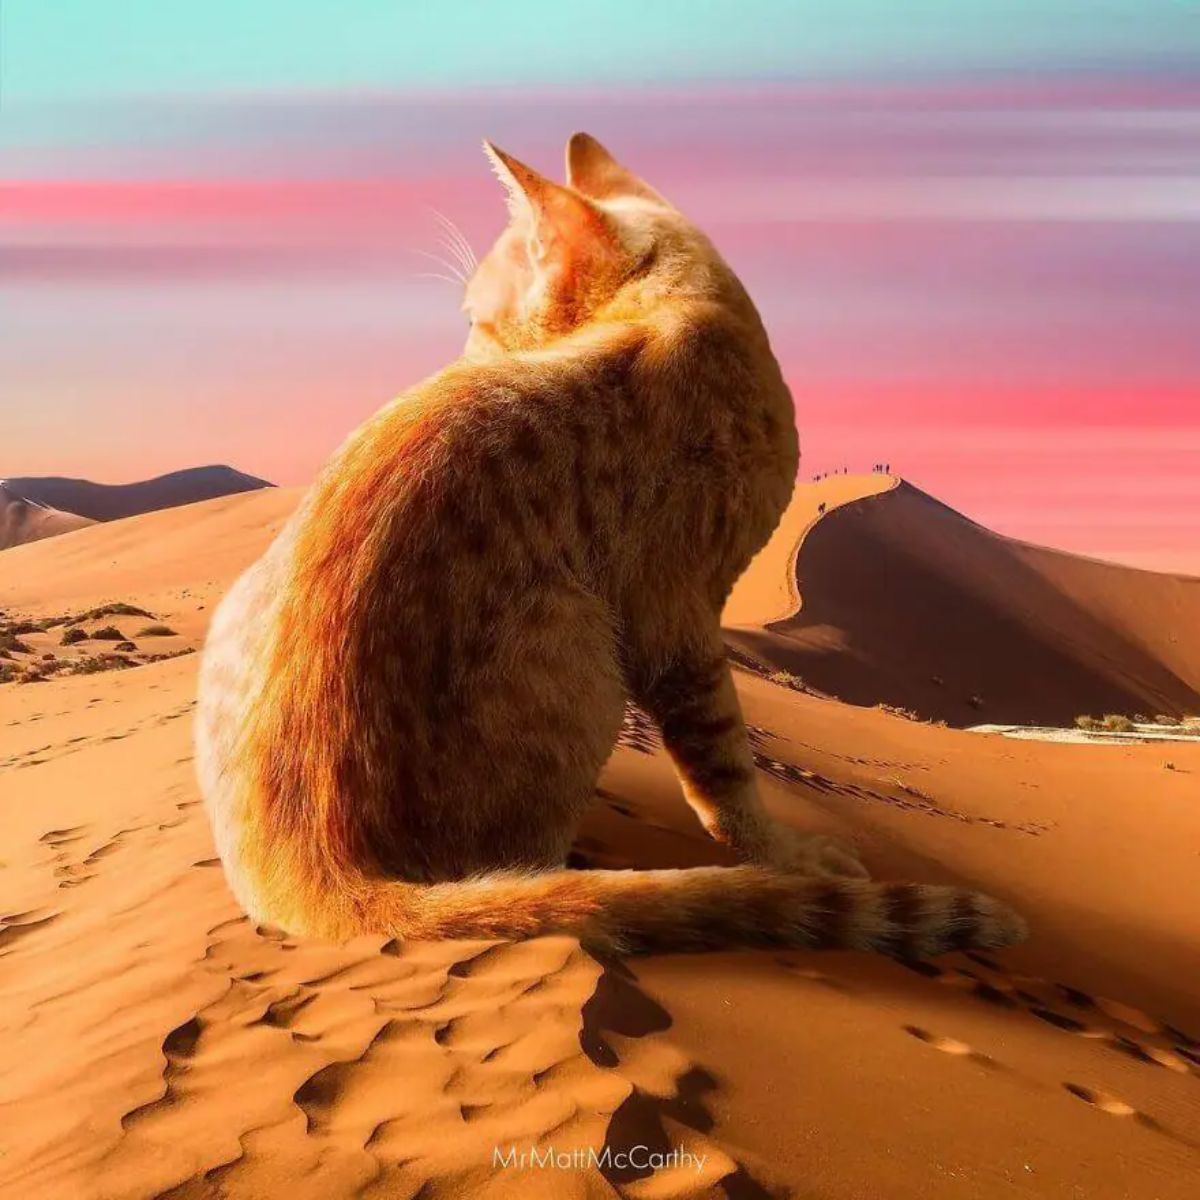 large photoshopped orange cat sitting in a sandy desert